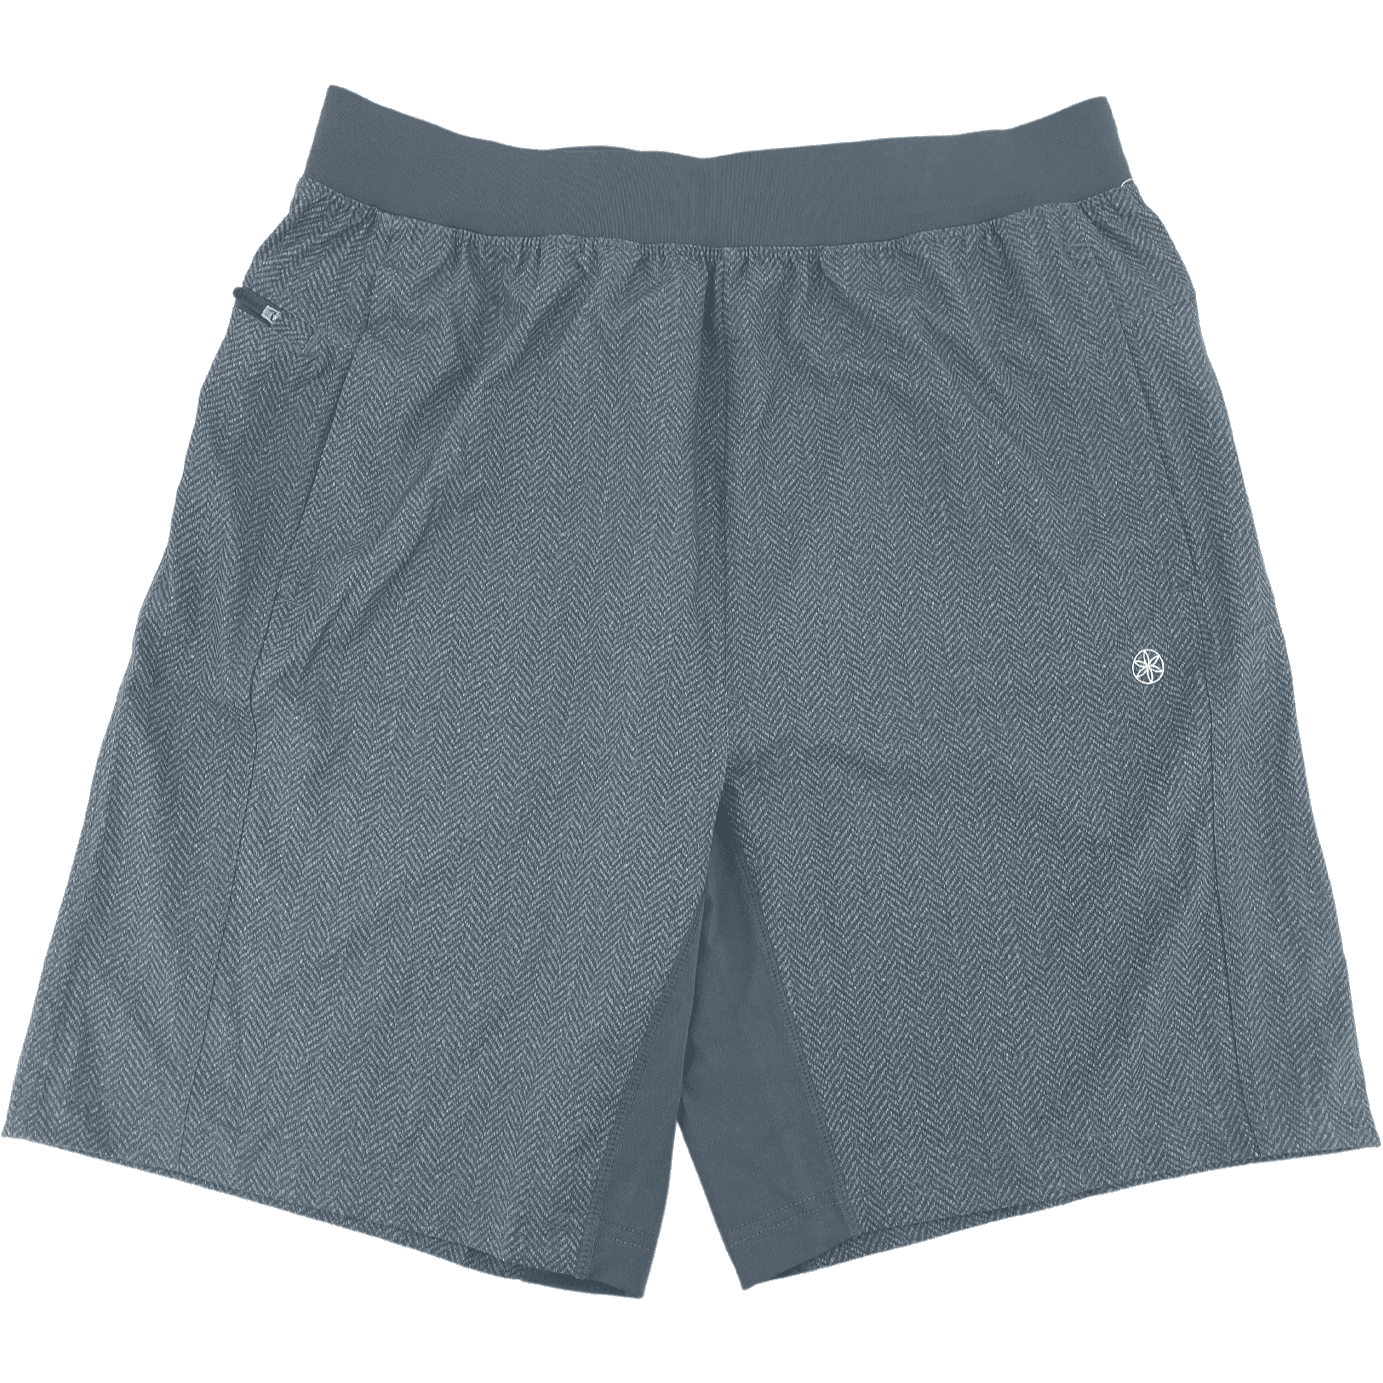 Gaiam Men's Shorts / Men's Athletic Shorts / Grey / Various Sizes